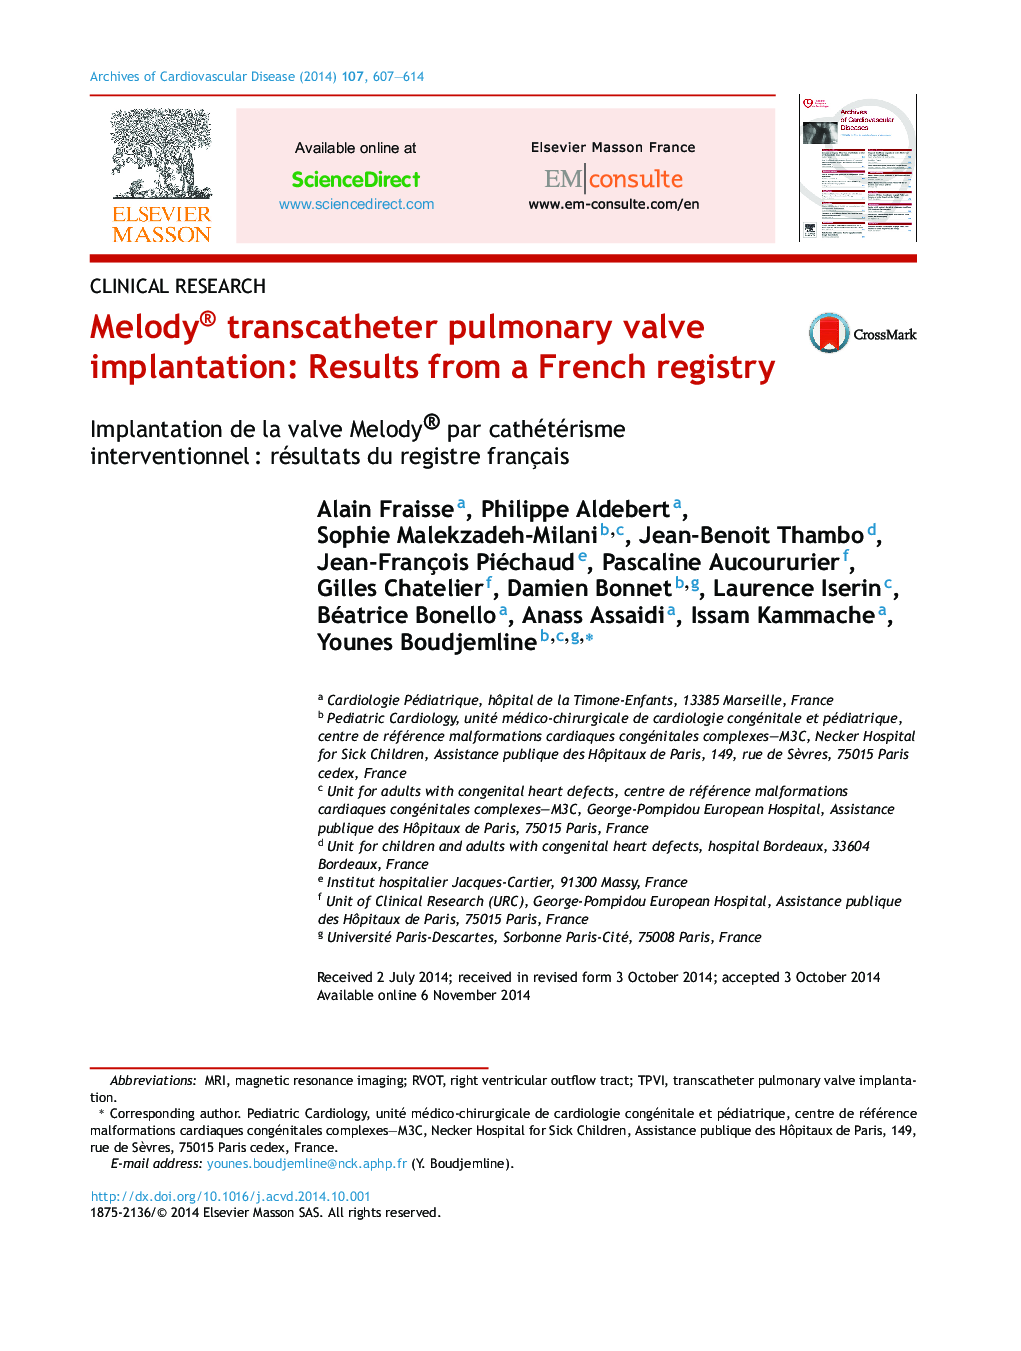 Melody® transcatheter pulmonary valve implantation: Results from a French registry